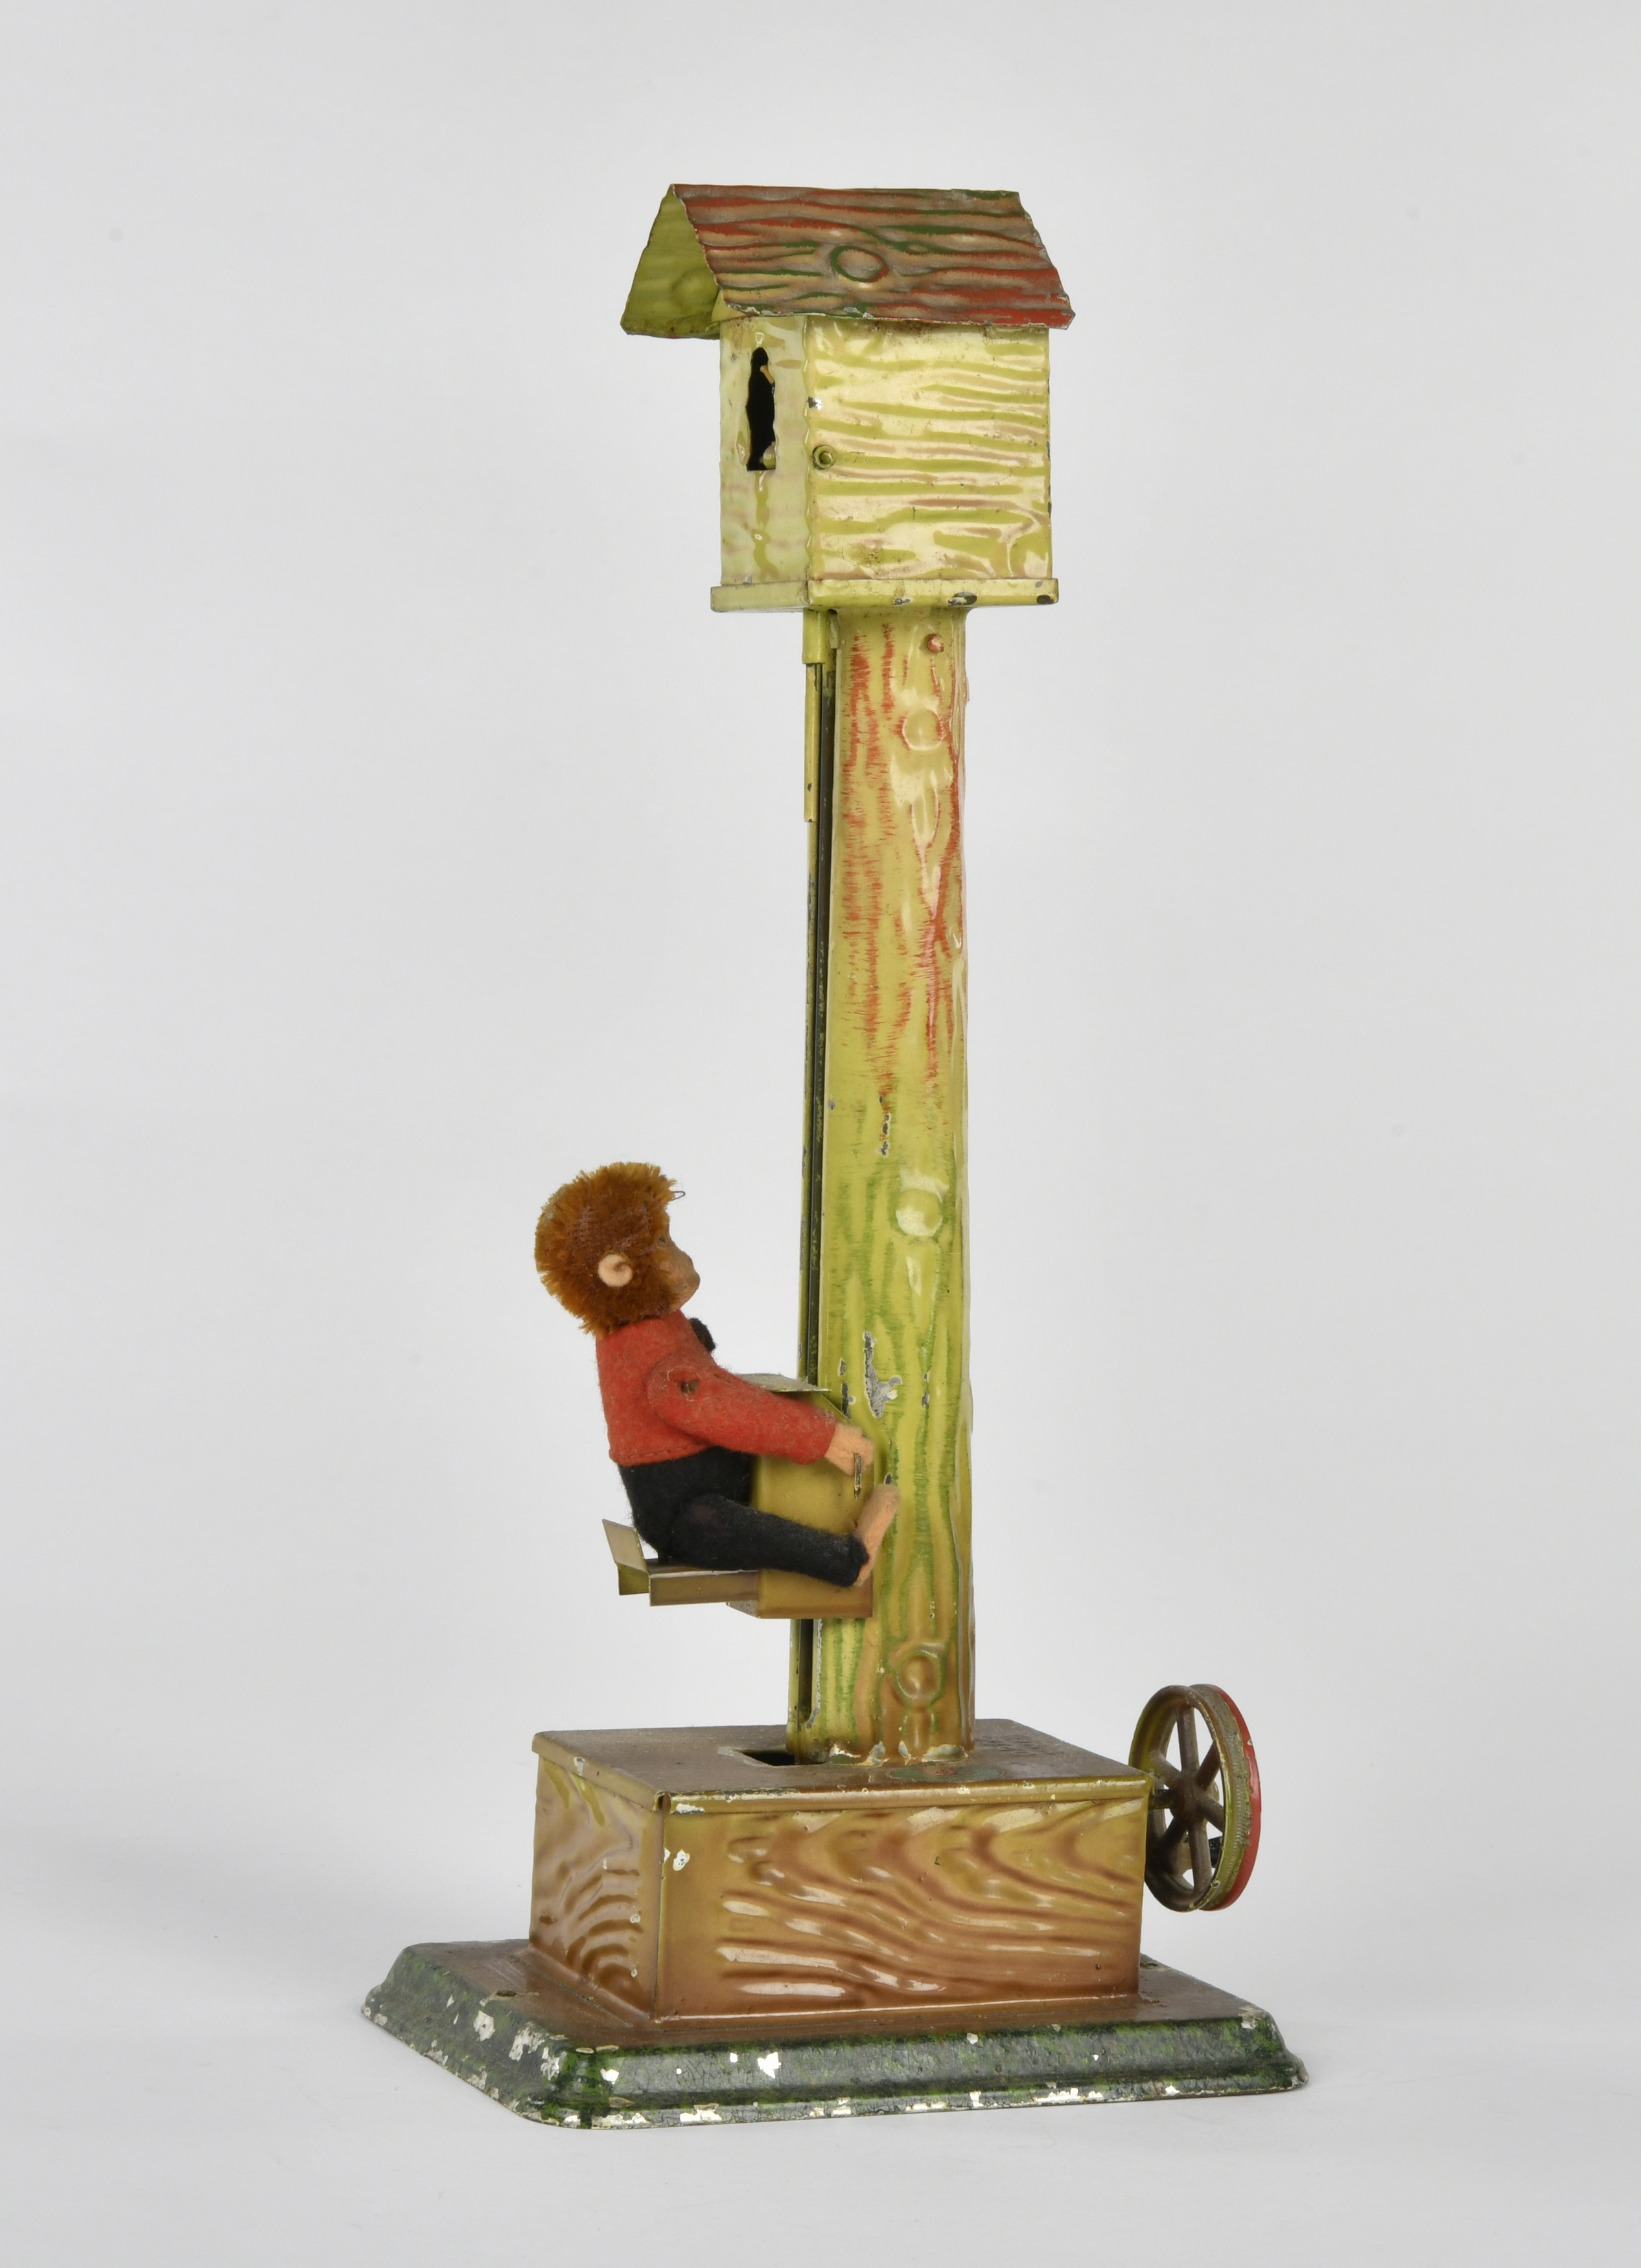 Doll, drive models, birdhouse with Schuco monkey, Germany pw, 30cm, paint d., C 2